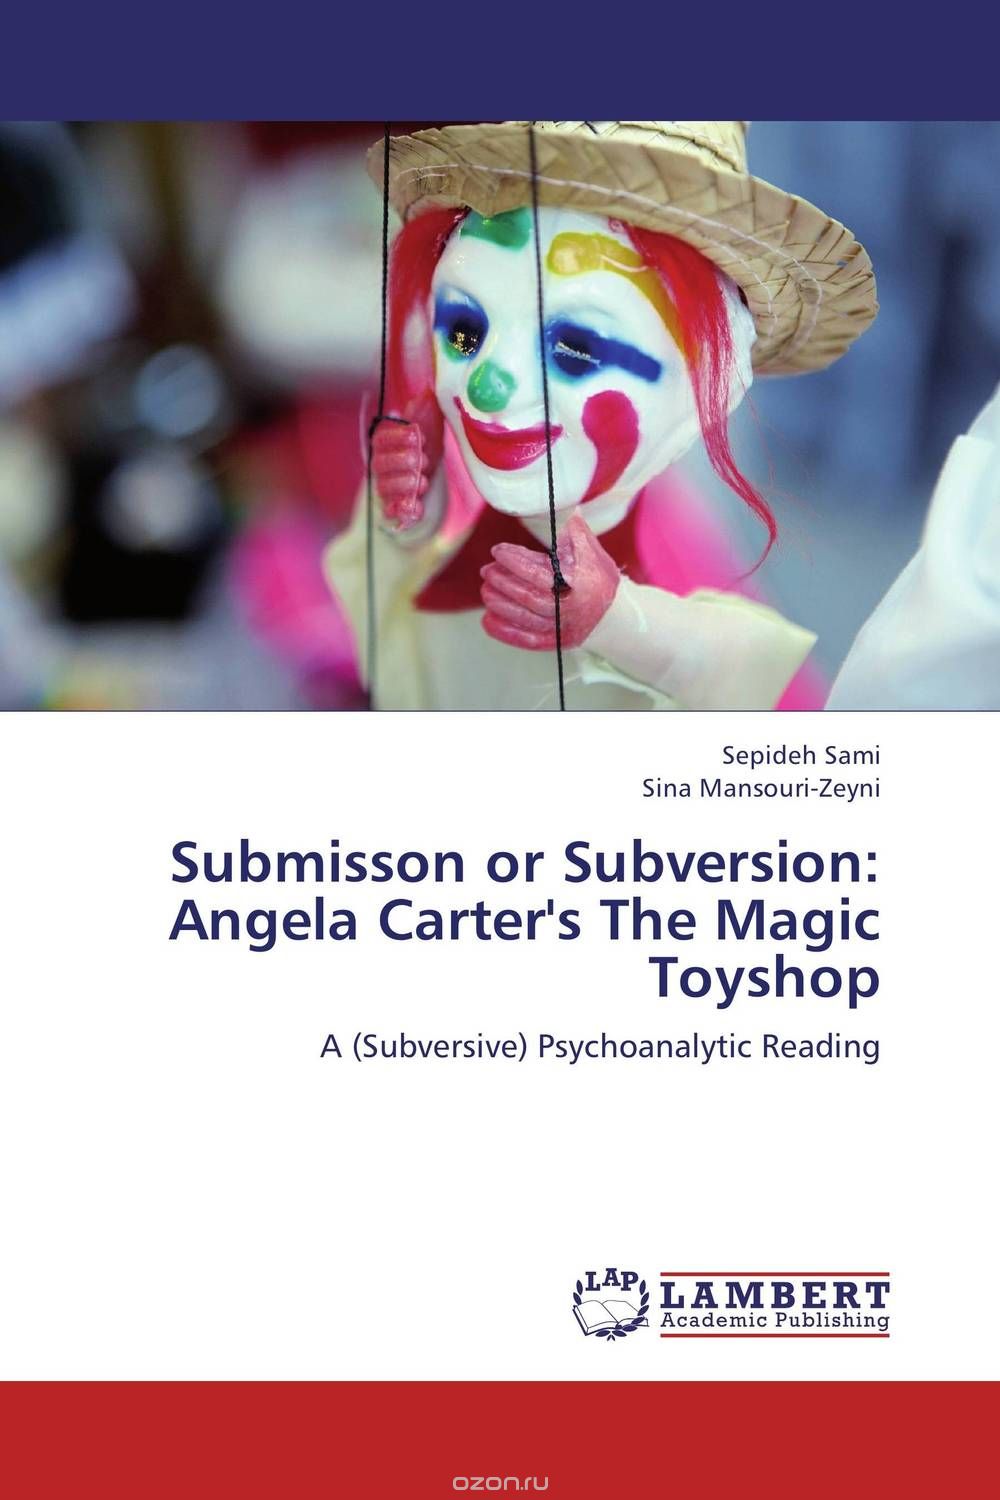 Скачать книгу "Submisson or Subversion: Angela Carter's The Magic Toyshop"